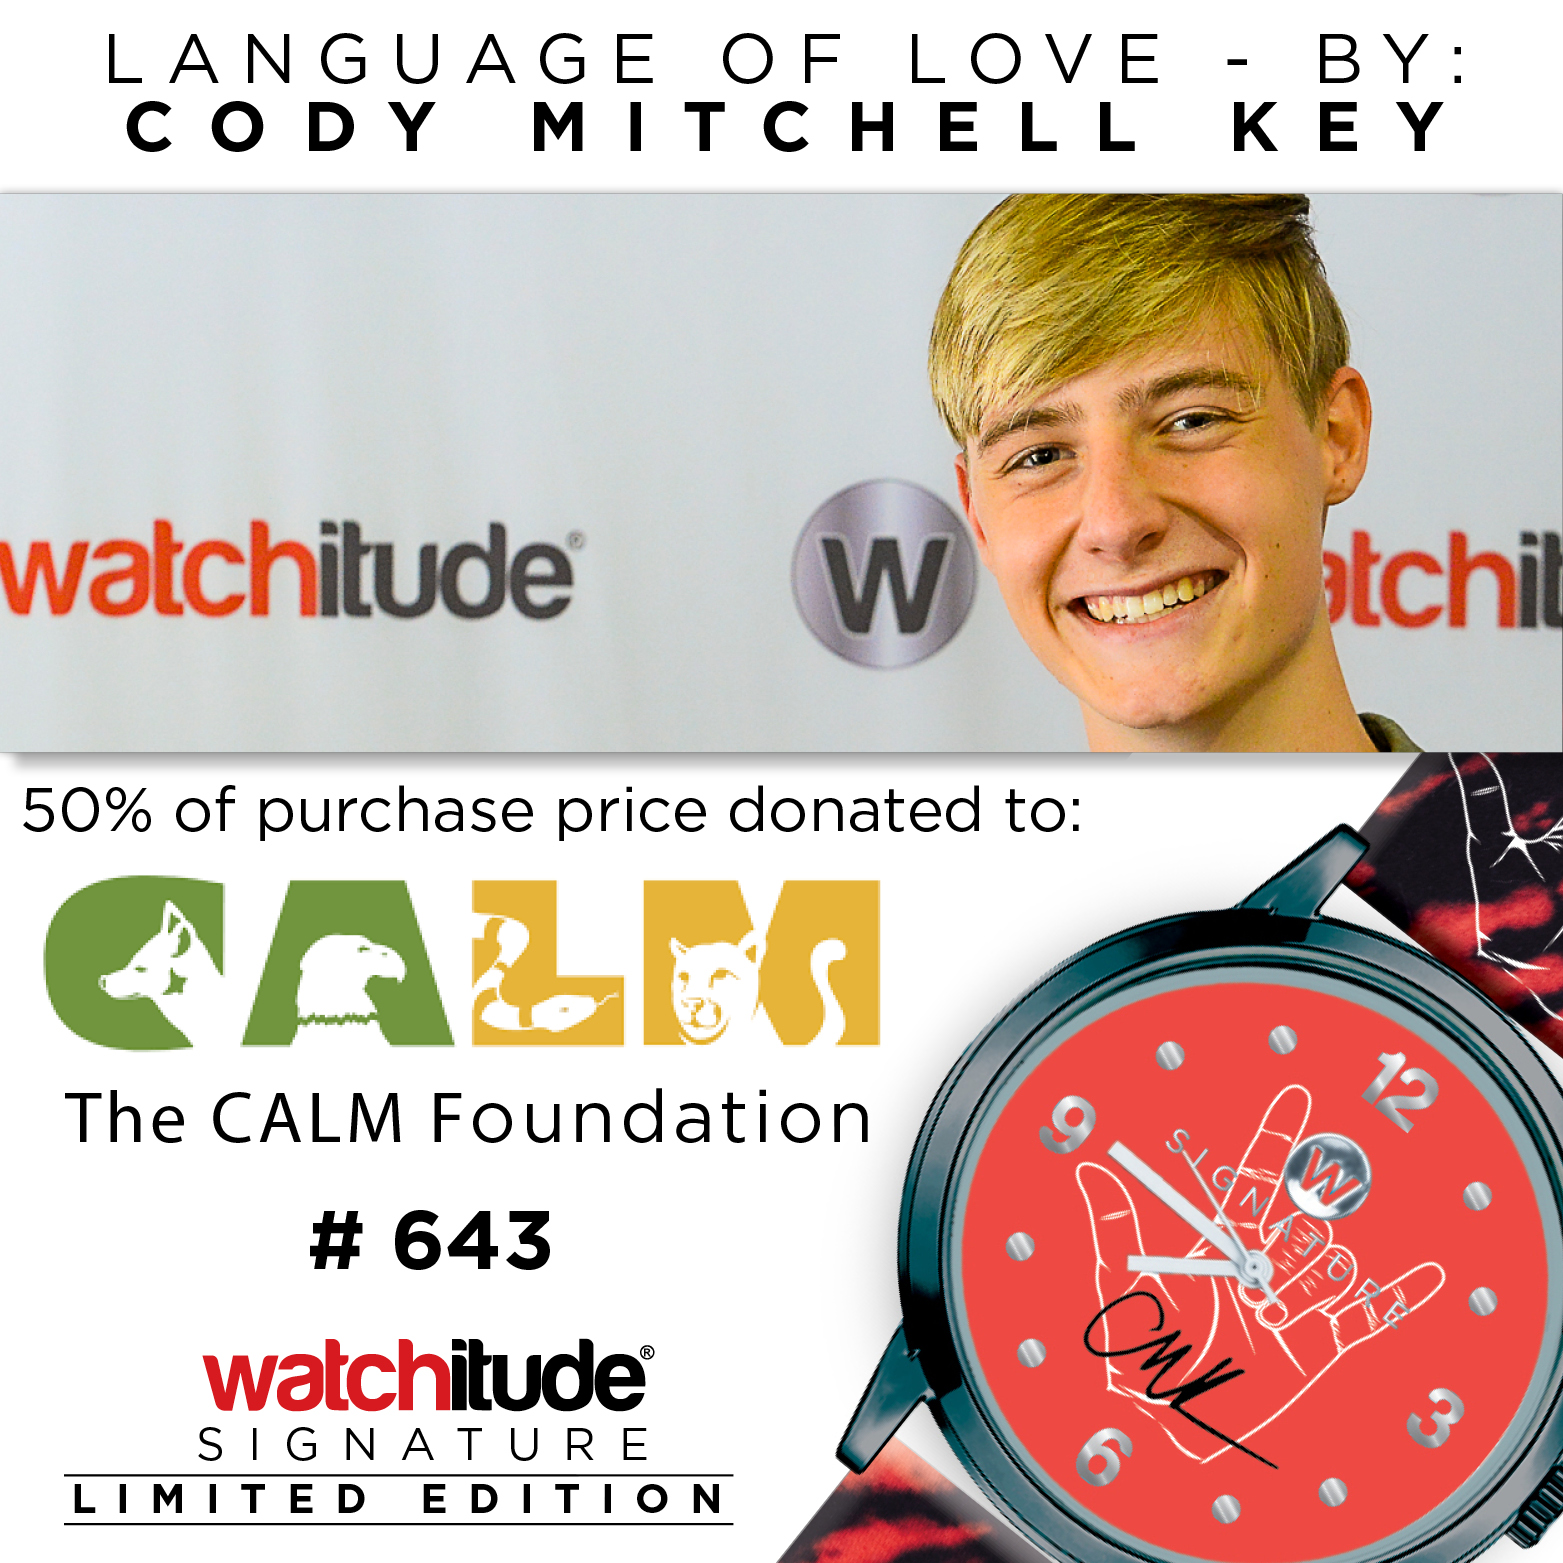 Language of Love - Cody Mitchel Key Signature watch